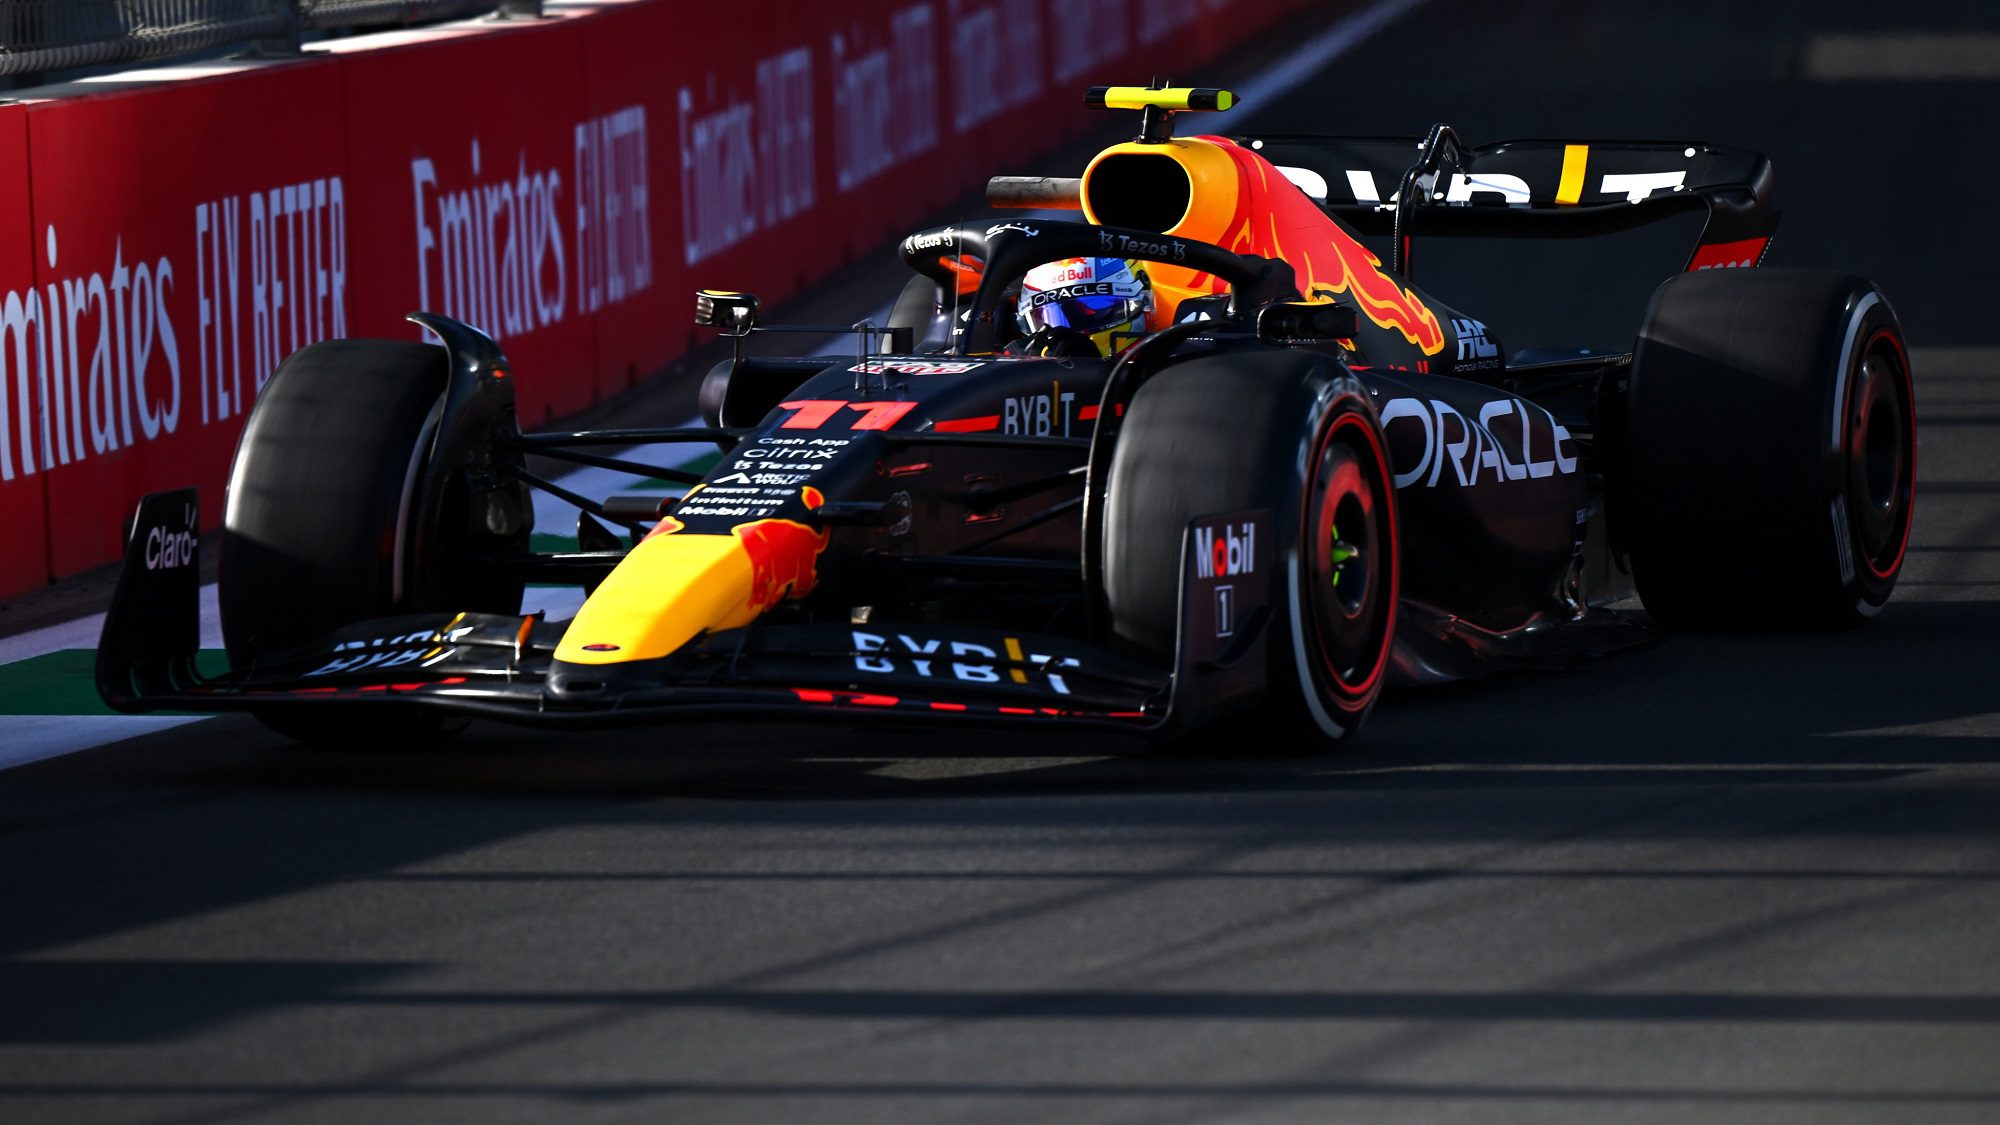 Fórmula 1: Charles Leclerc surpreende com 'pole position' no México